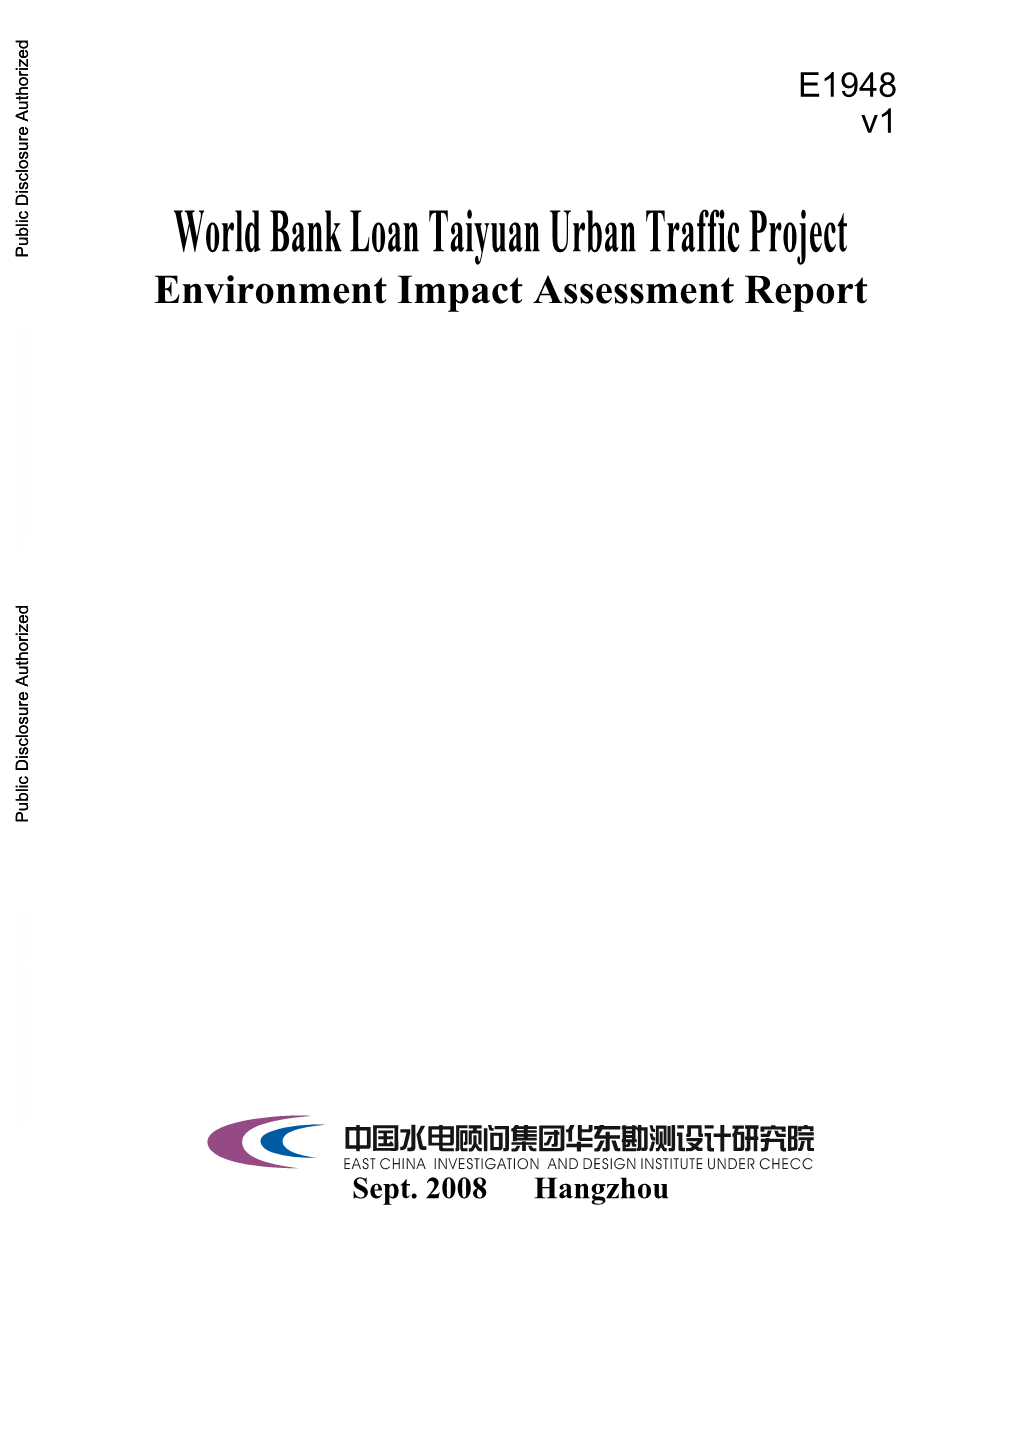 World Bank Loan Taiyuan Urban Traffic Project Environment Impact Assessment Report